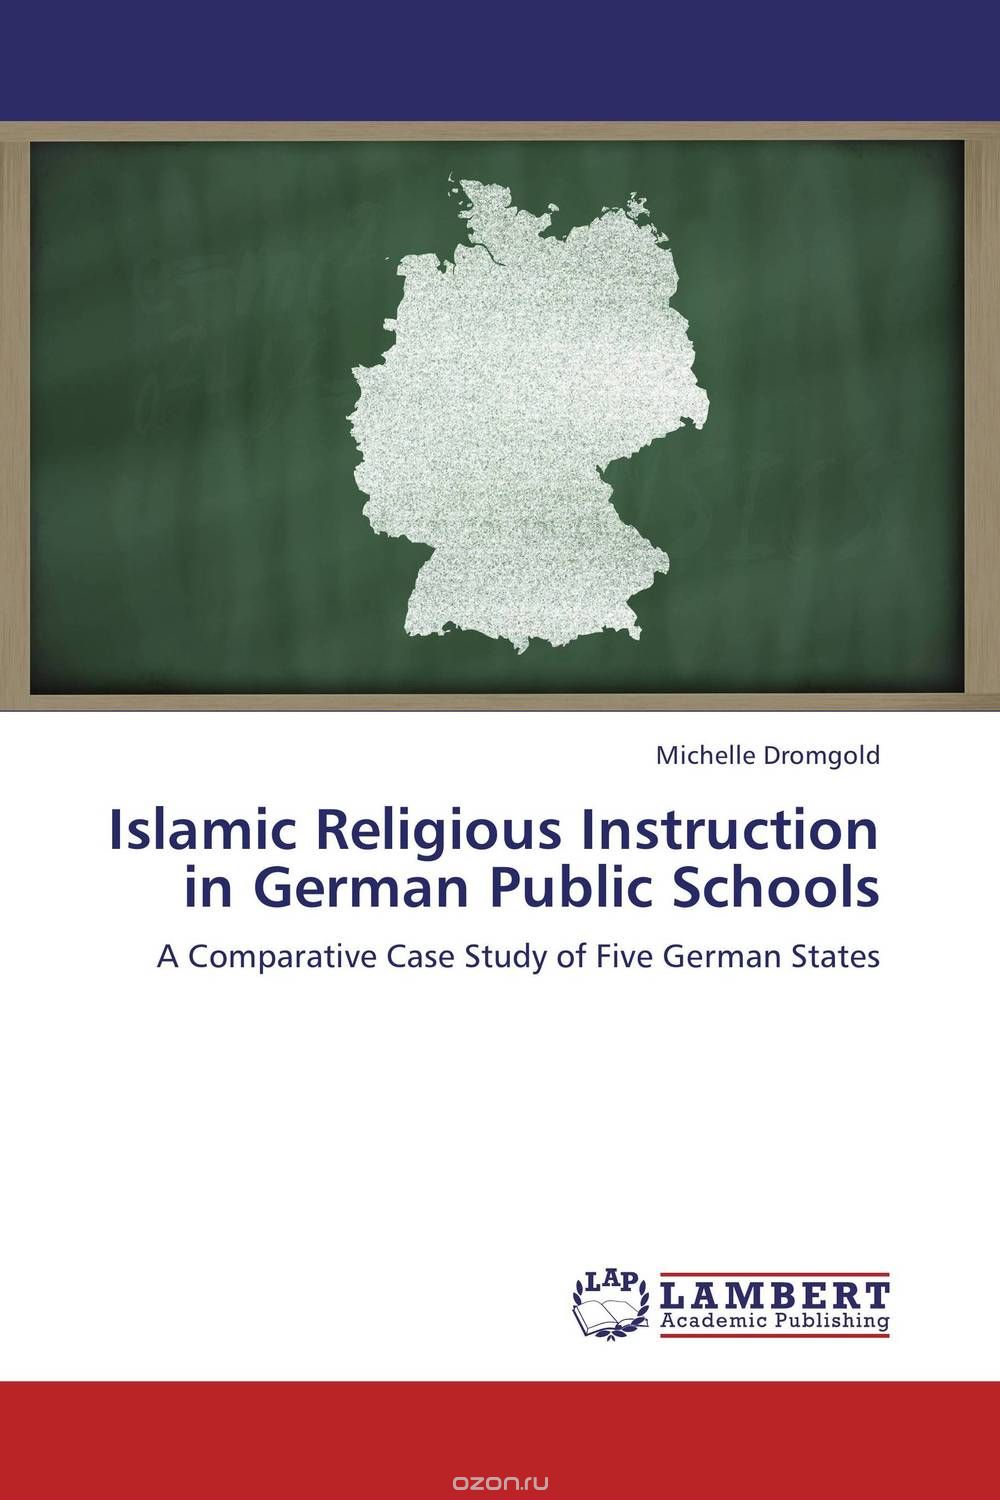 Скачать книгу "Islamic Religious Instruction in German Public Schools"